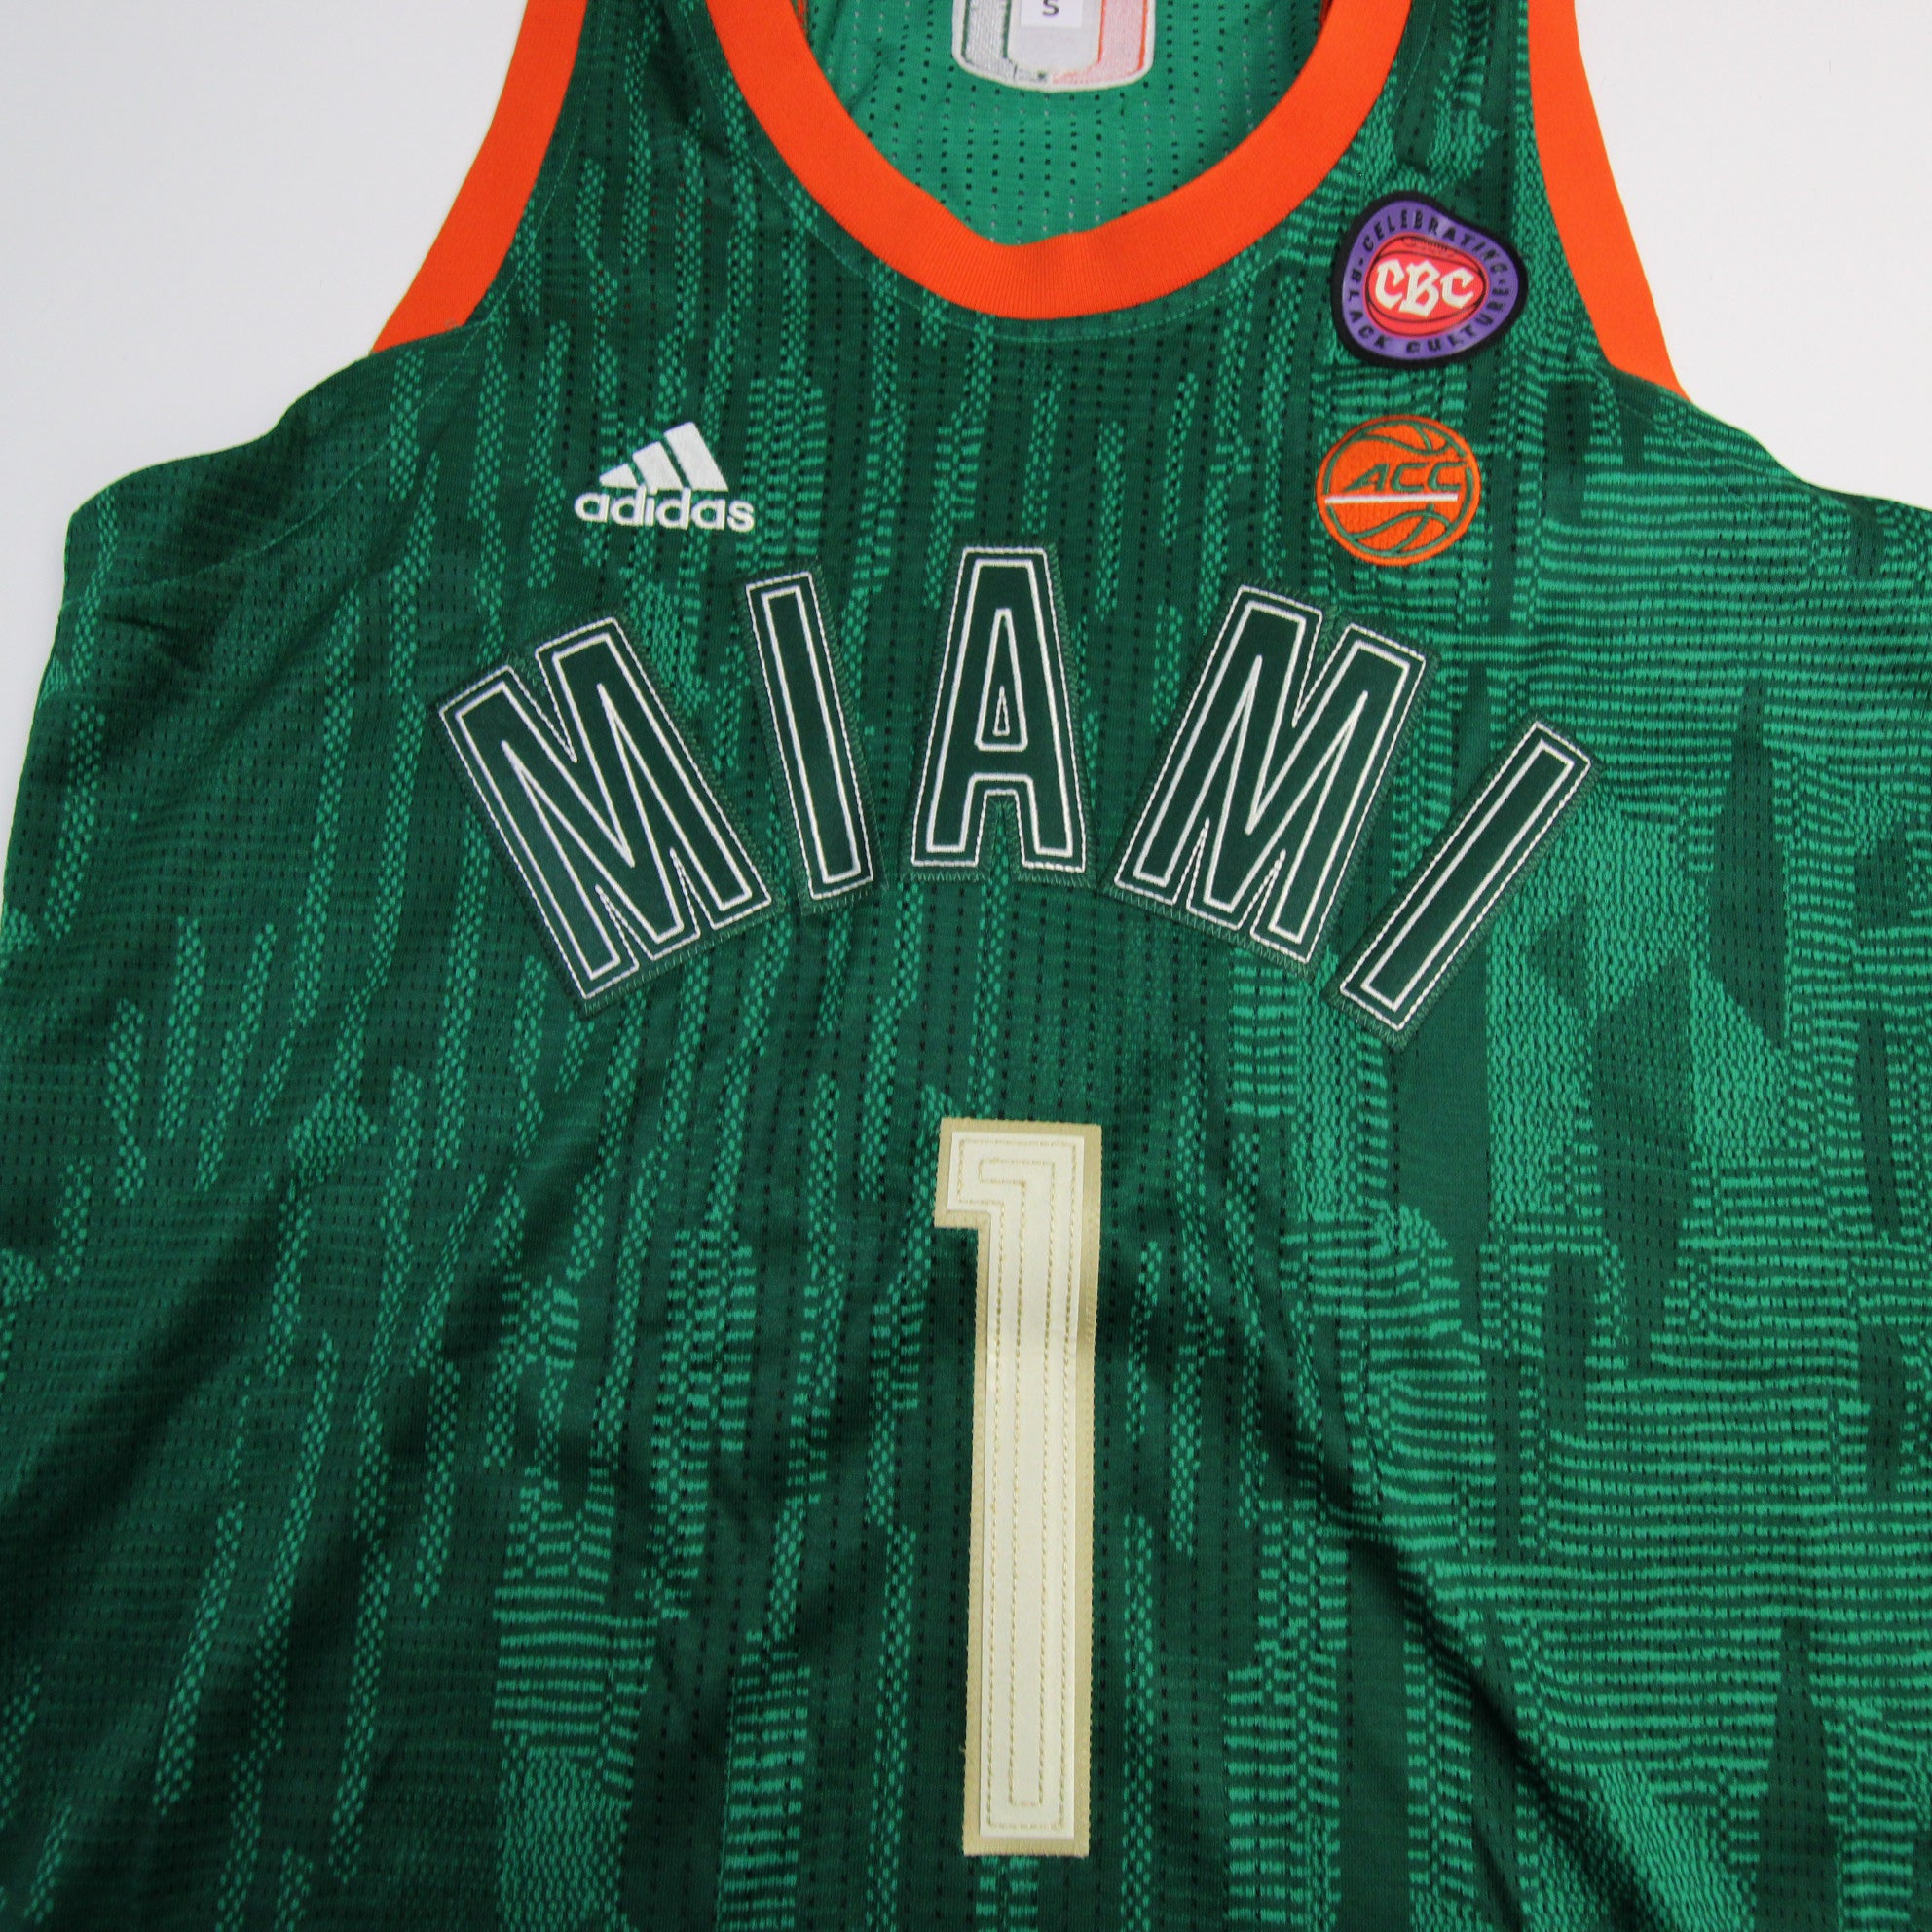 Miami Hurricanes adidas Game Jersey - Basketball Men's Green/Orange New MT